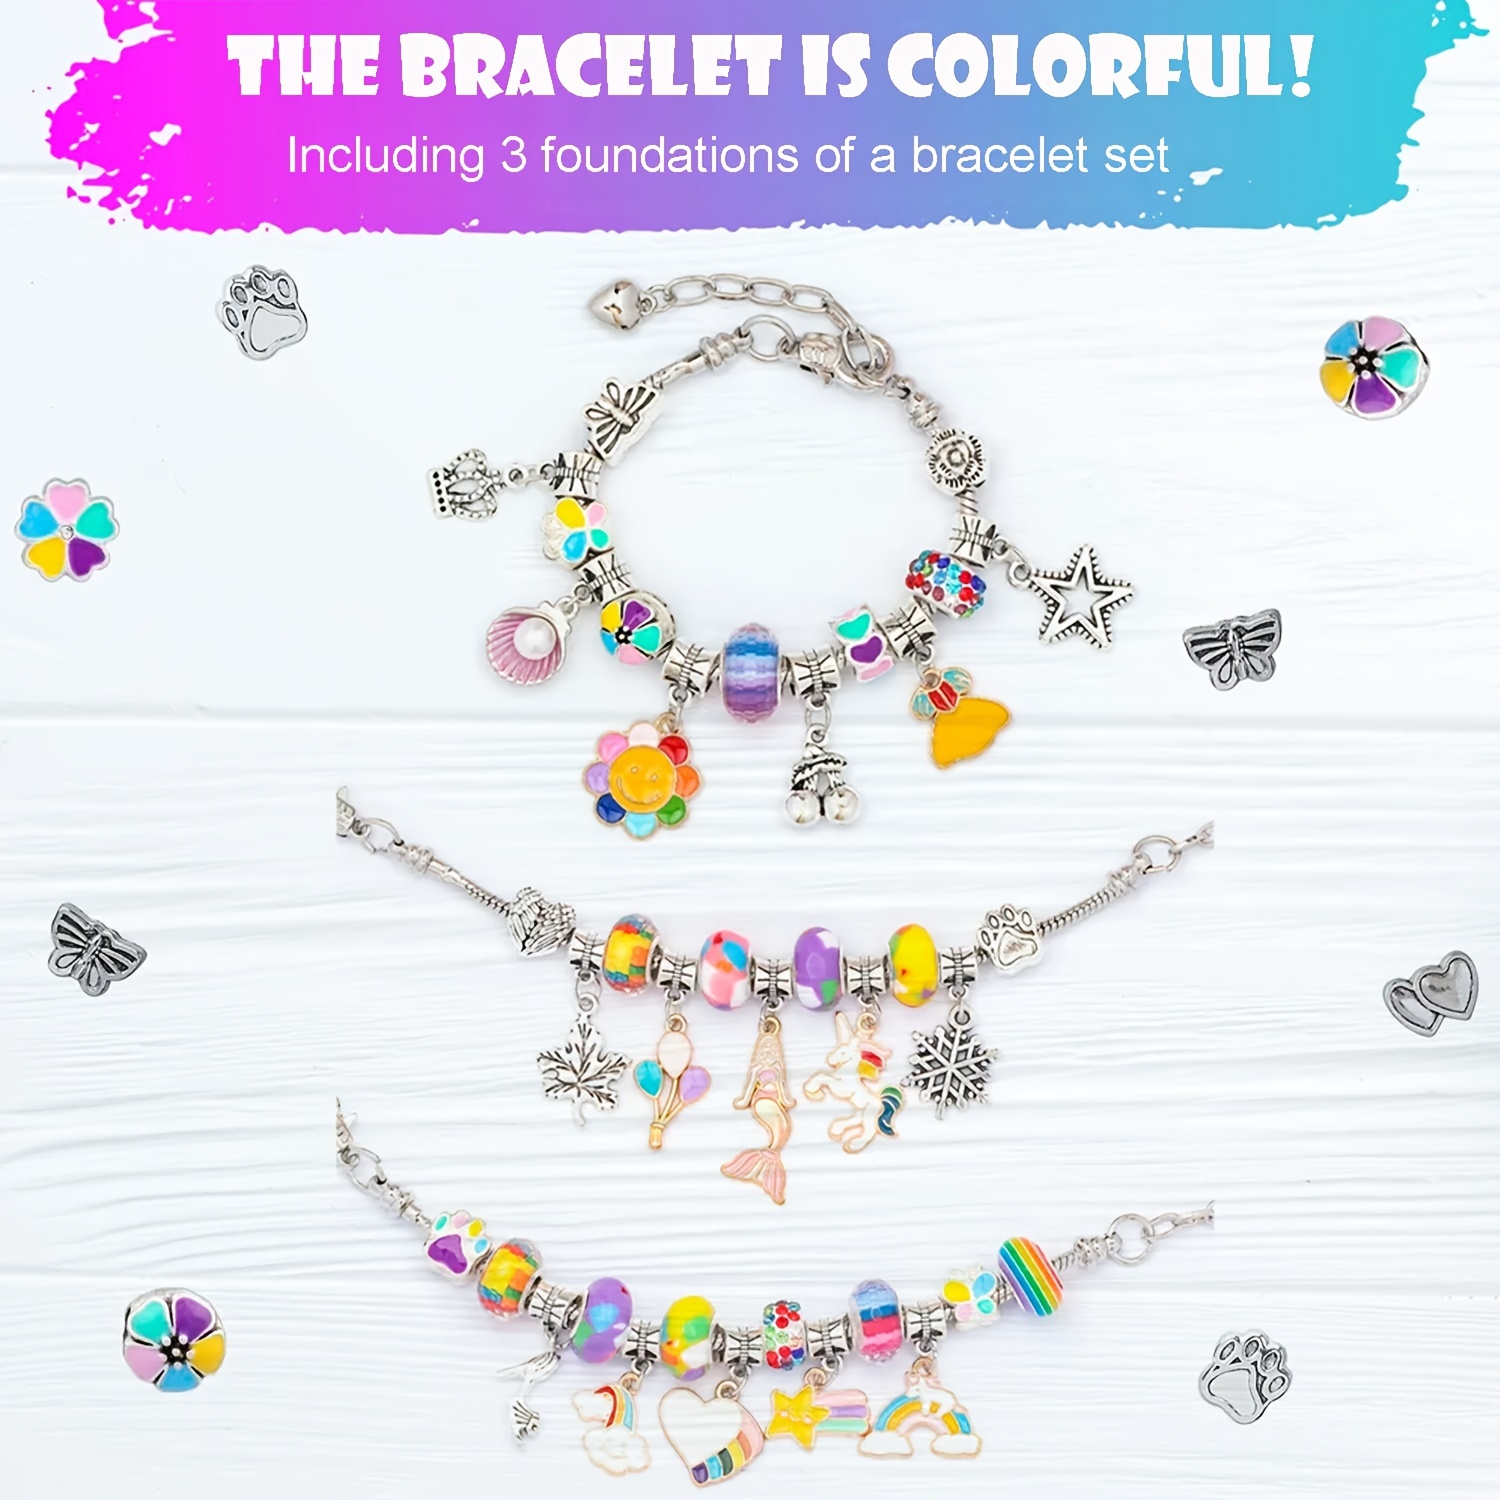 Charm Bracelet Making Kit for Girls, DIY Jewelery Making, Unicorn / Mermaid  / Swan / Dreamy / European Craft Gifts for Teen Girls Age 8-12 